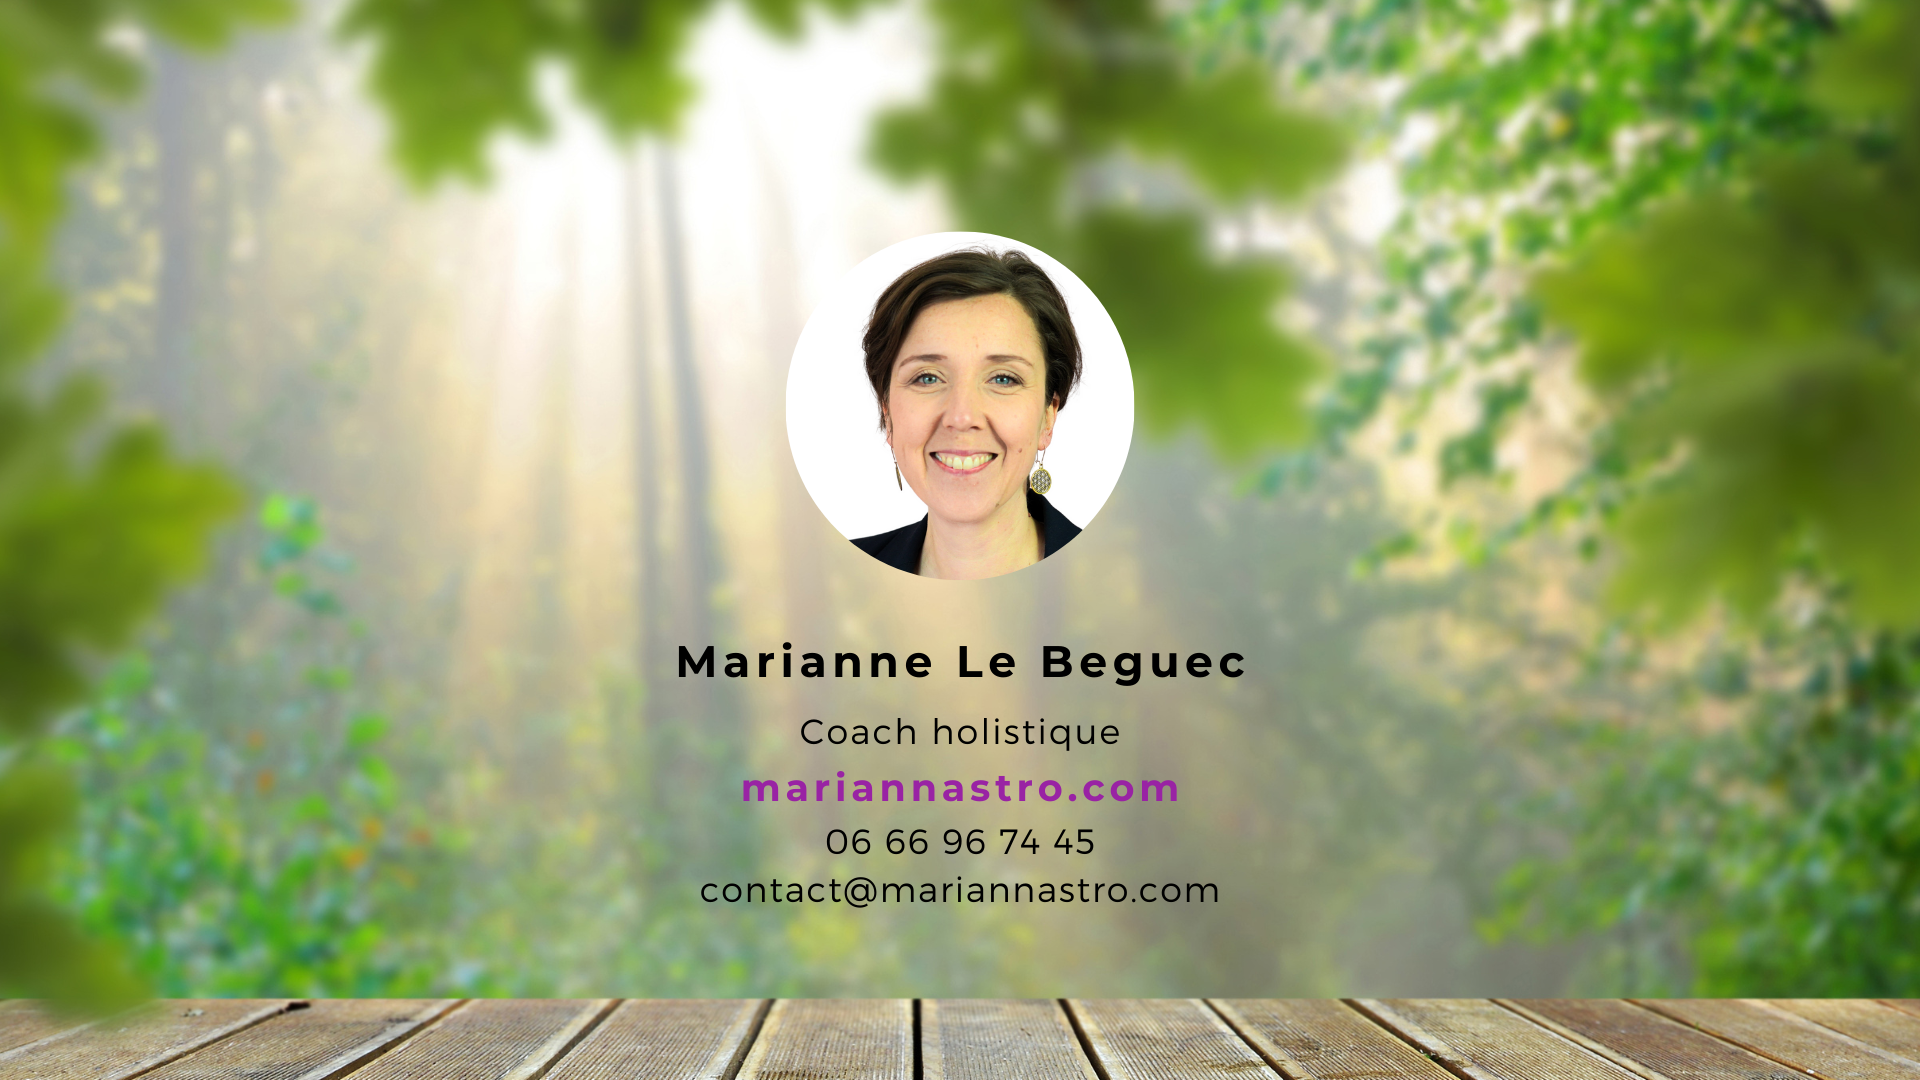 Mariannastro - Marianne Le Beguec - Cotes darmor 2